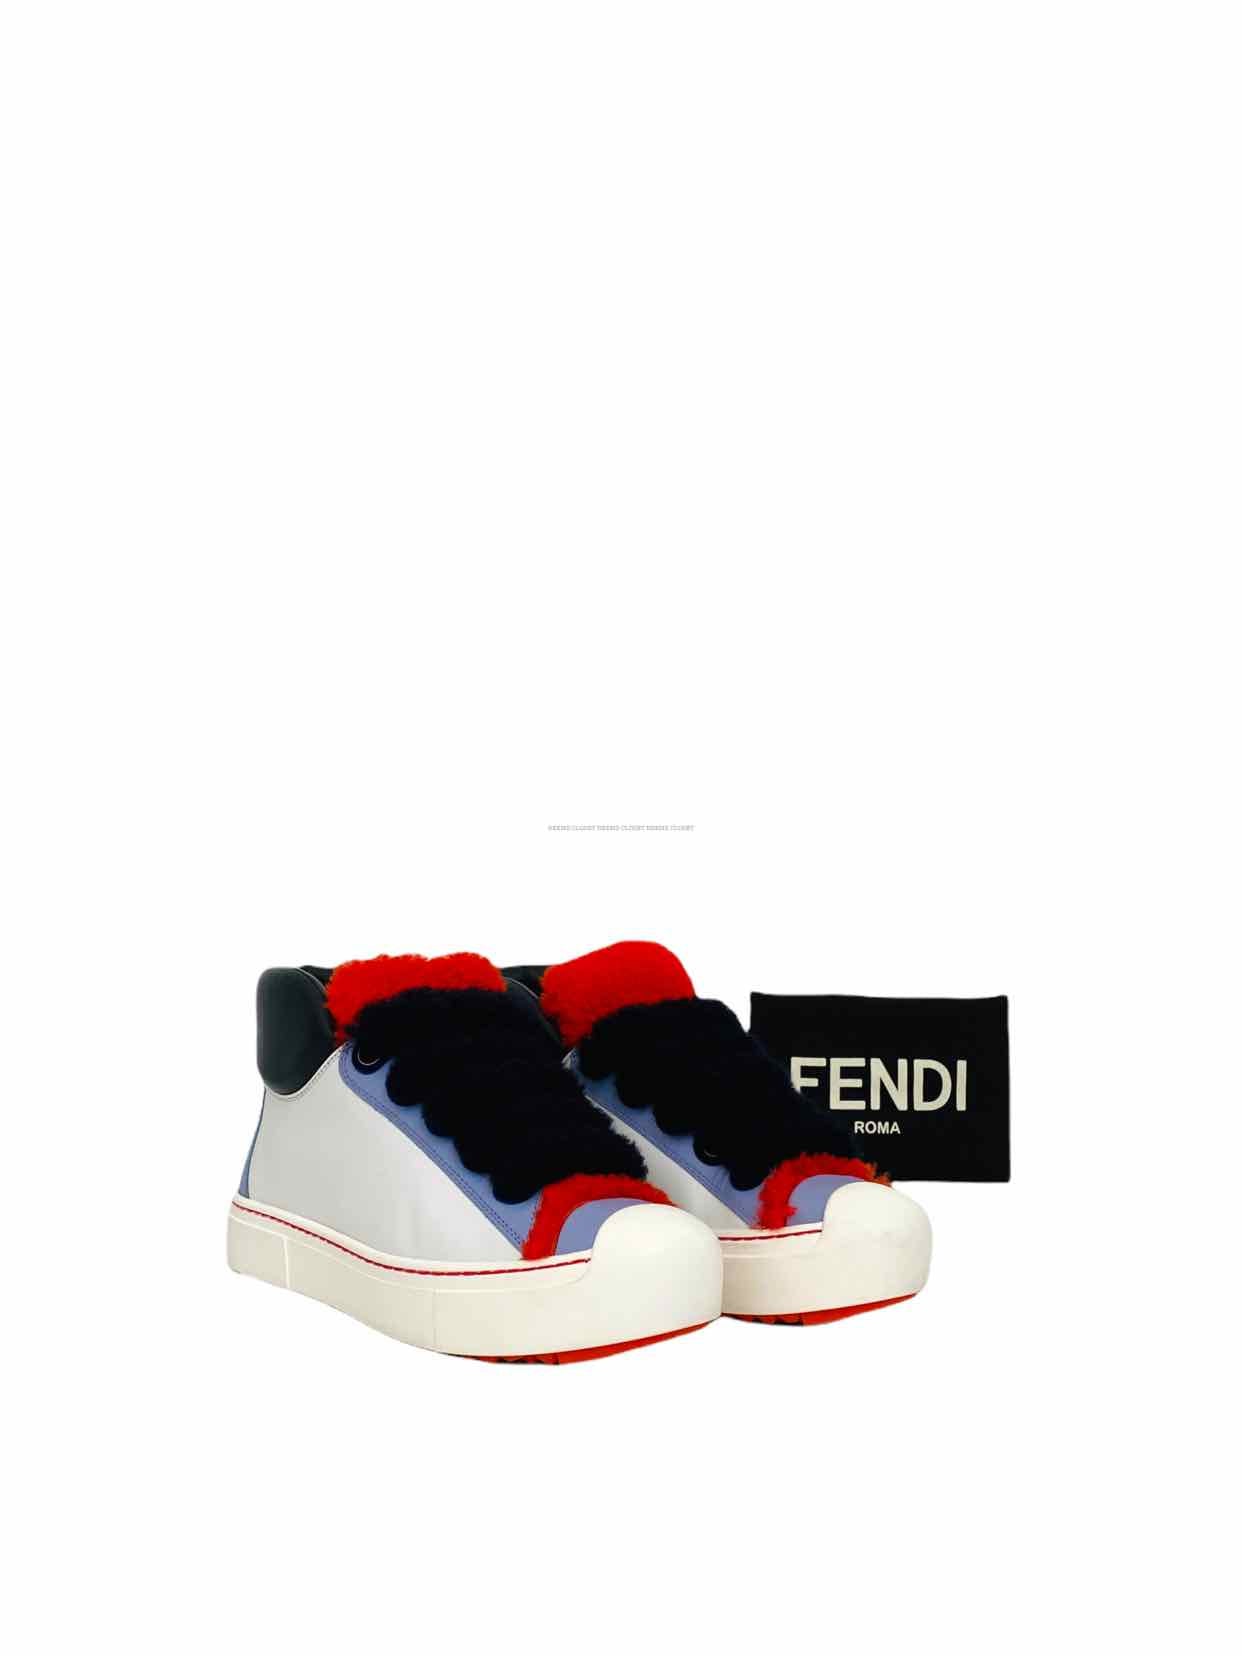 FENDI High Top White Multicolor Shearling Fur Sneakers